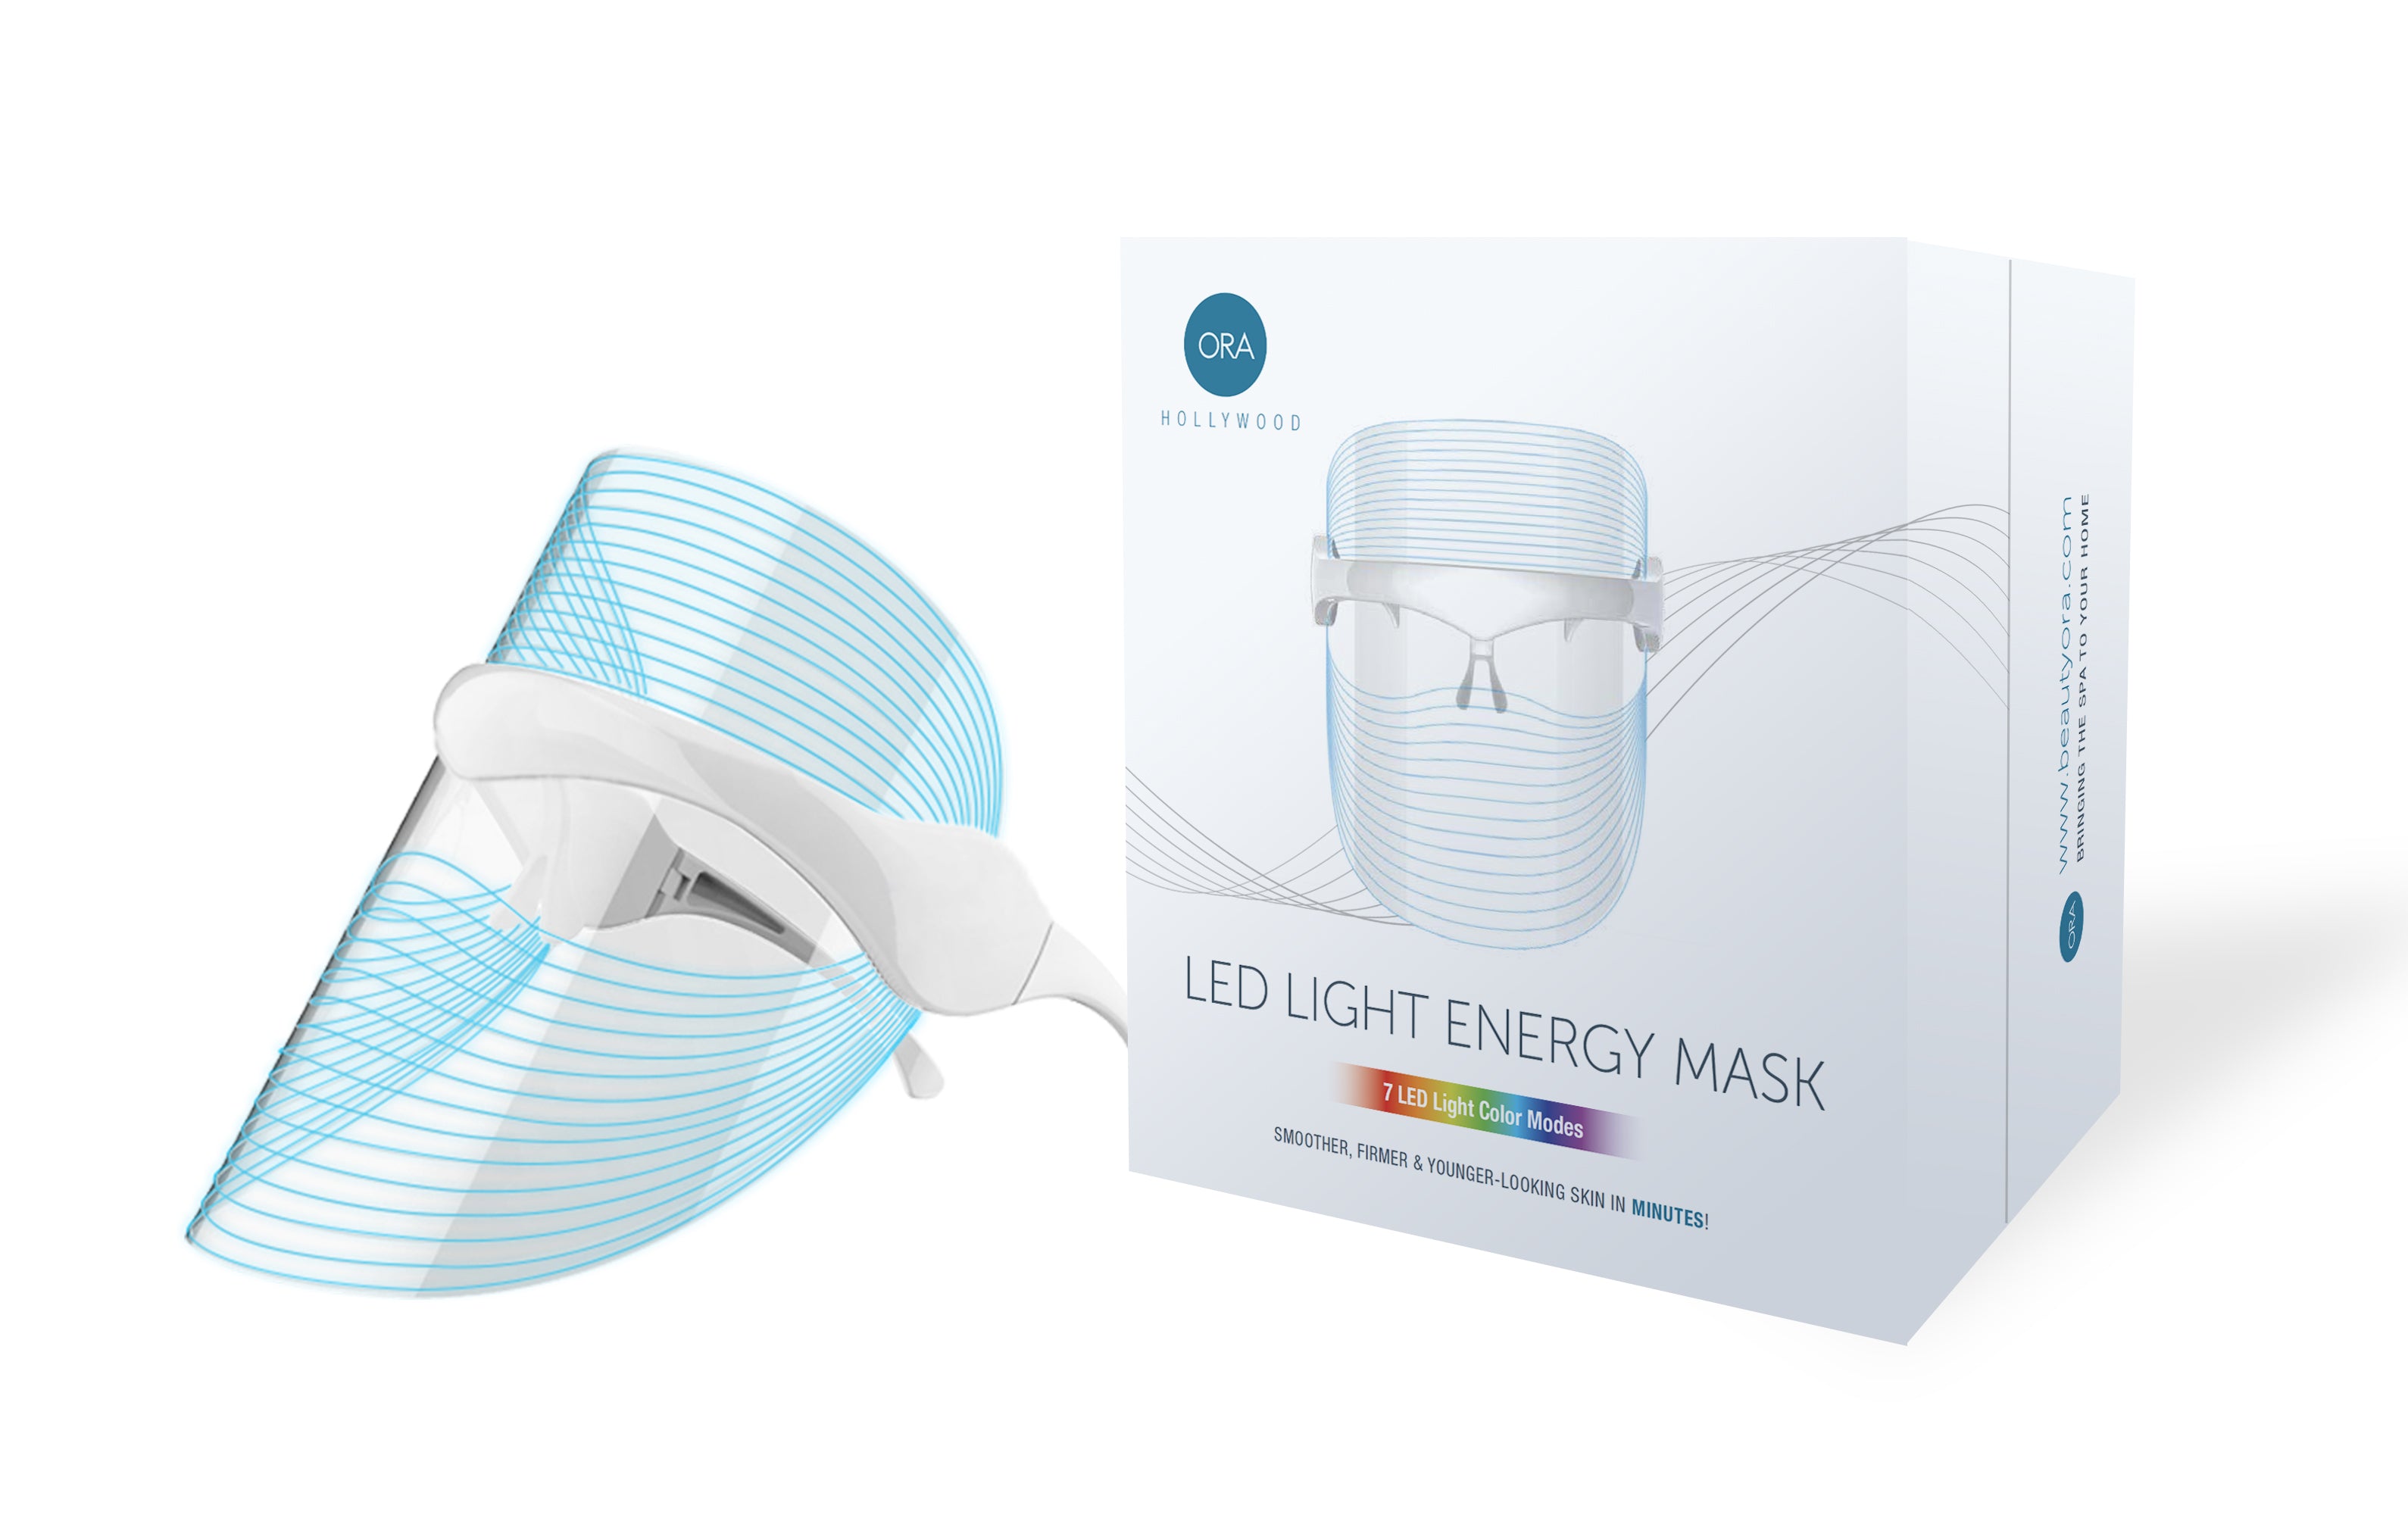 ORA LED Light Energy Mask (with 7 LED Light Color Modes)